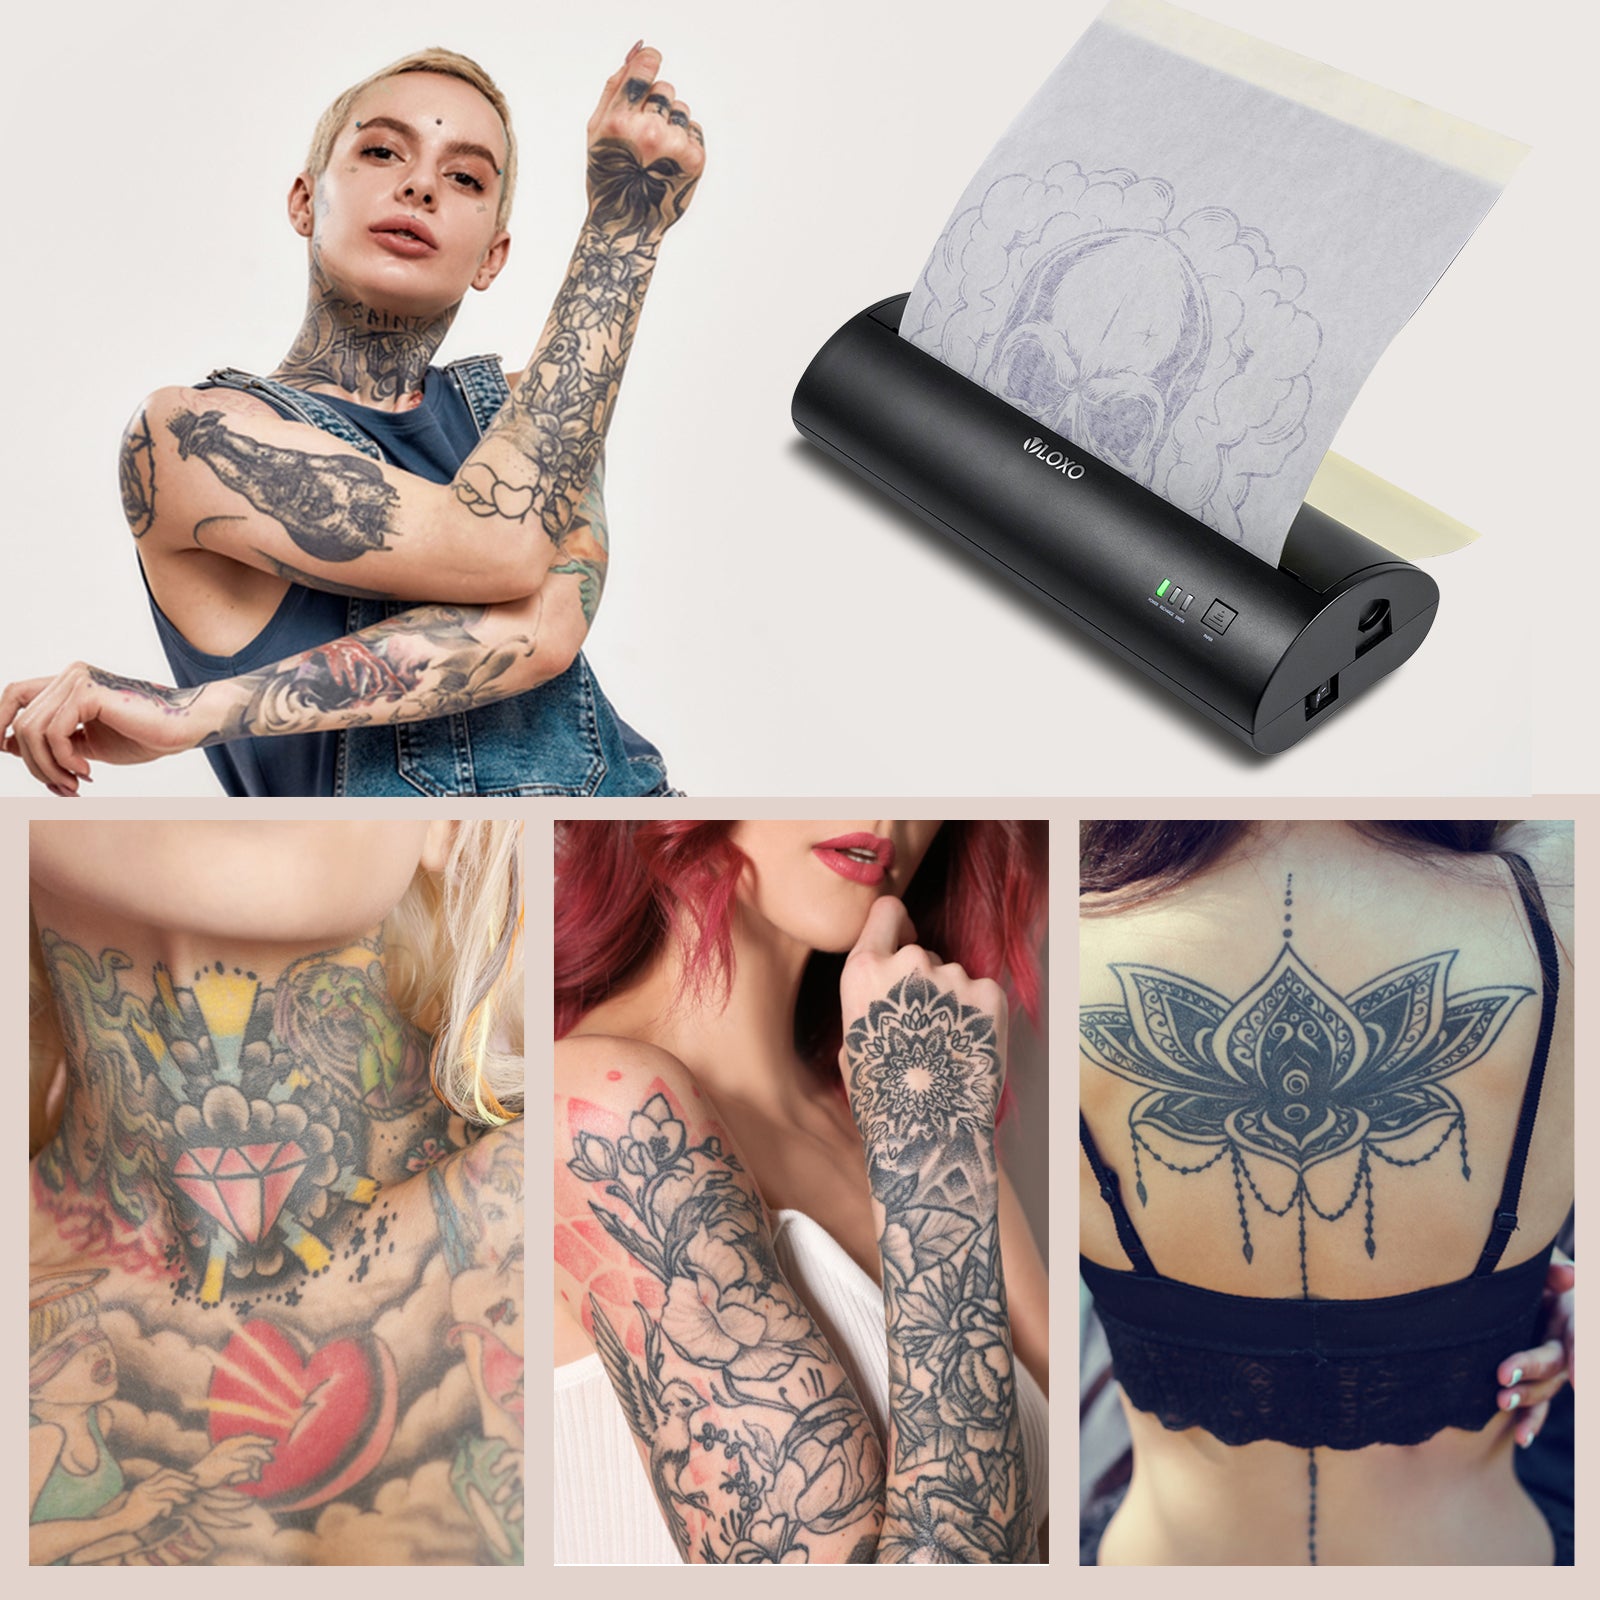 LG Household & Health Care to launch portable tattoo printer - Global  Cosmetics News